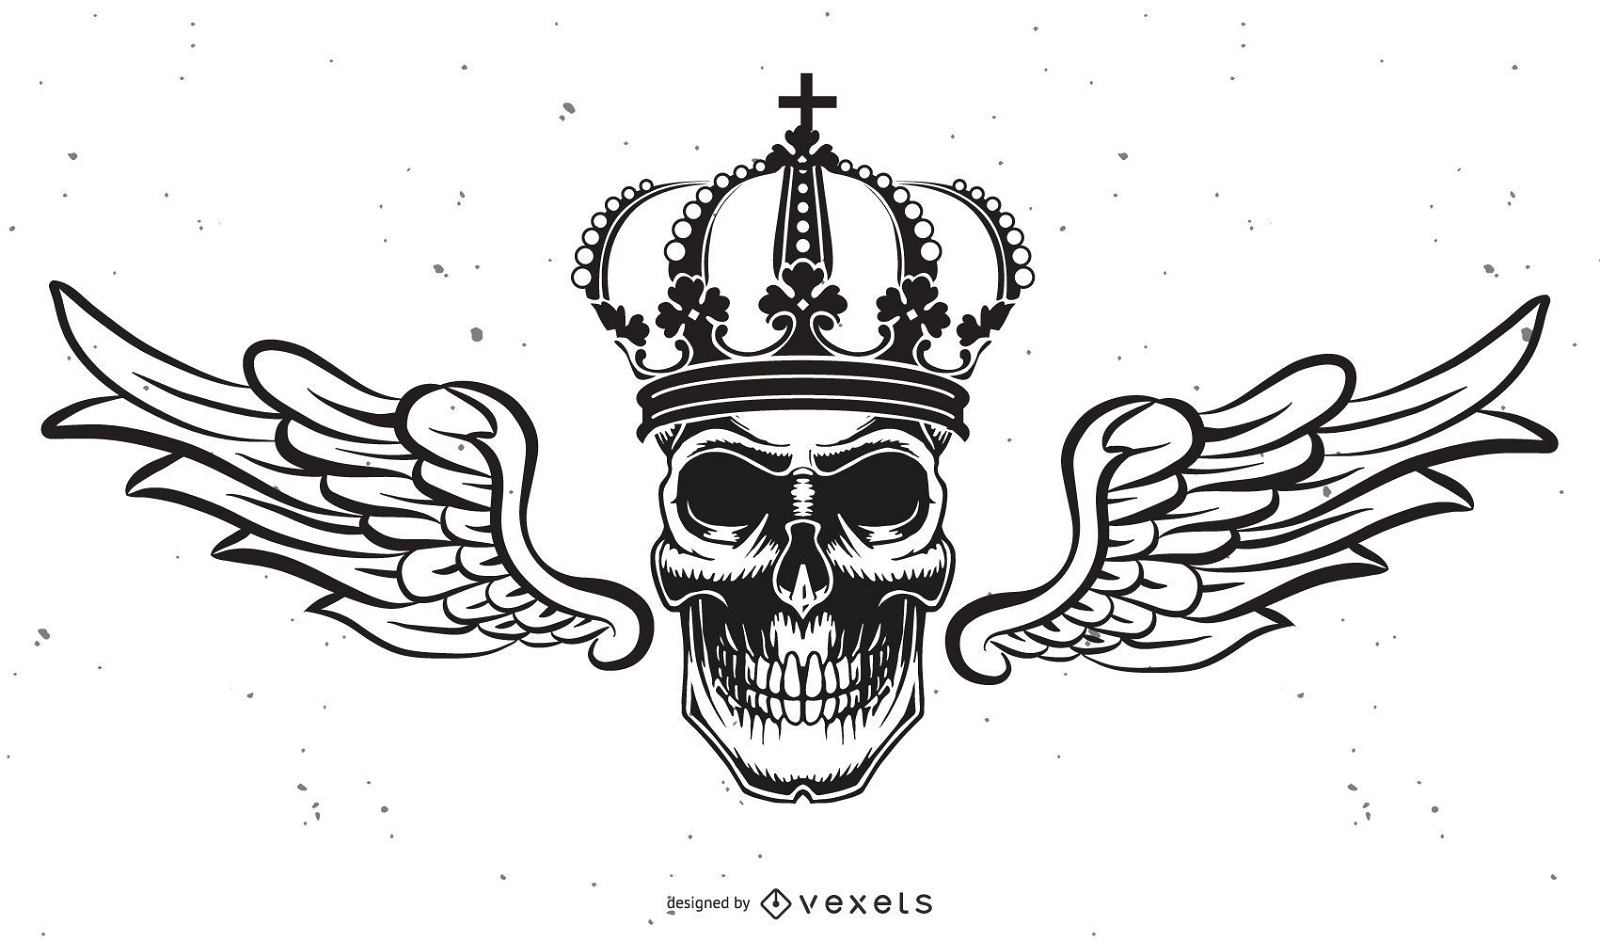 Skull with crown illustration design